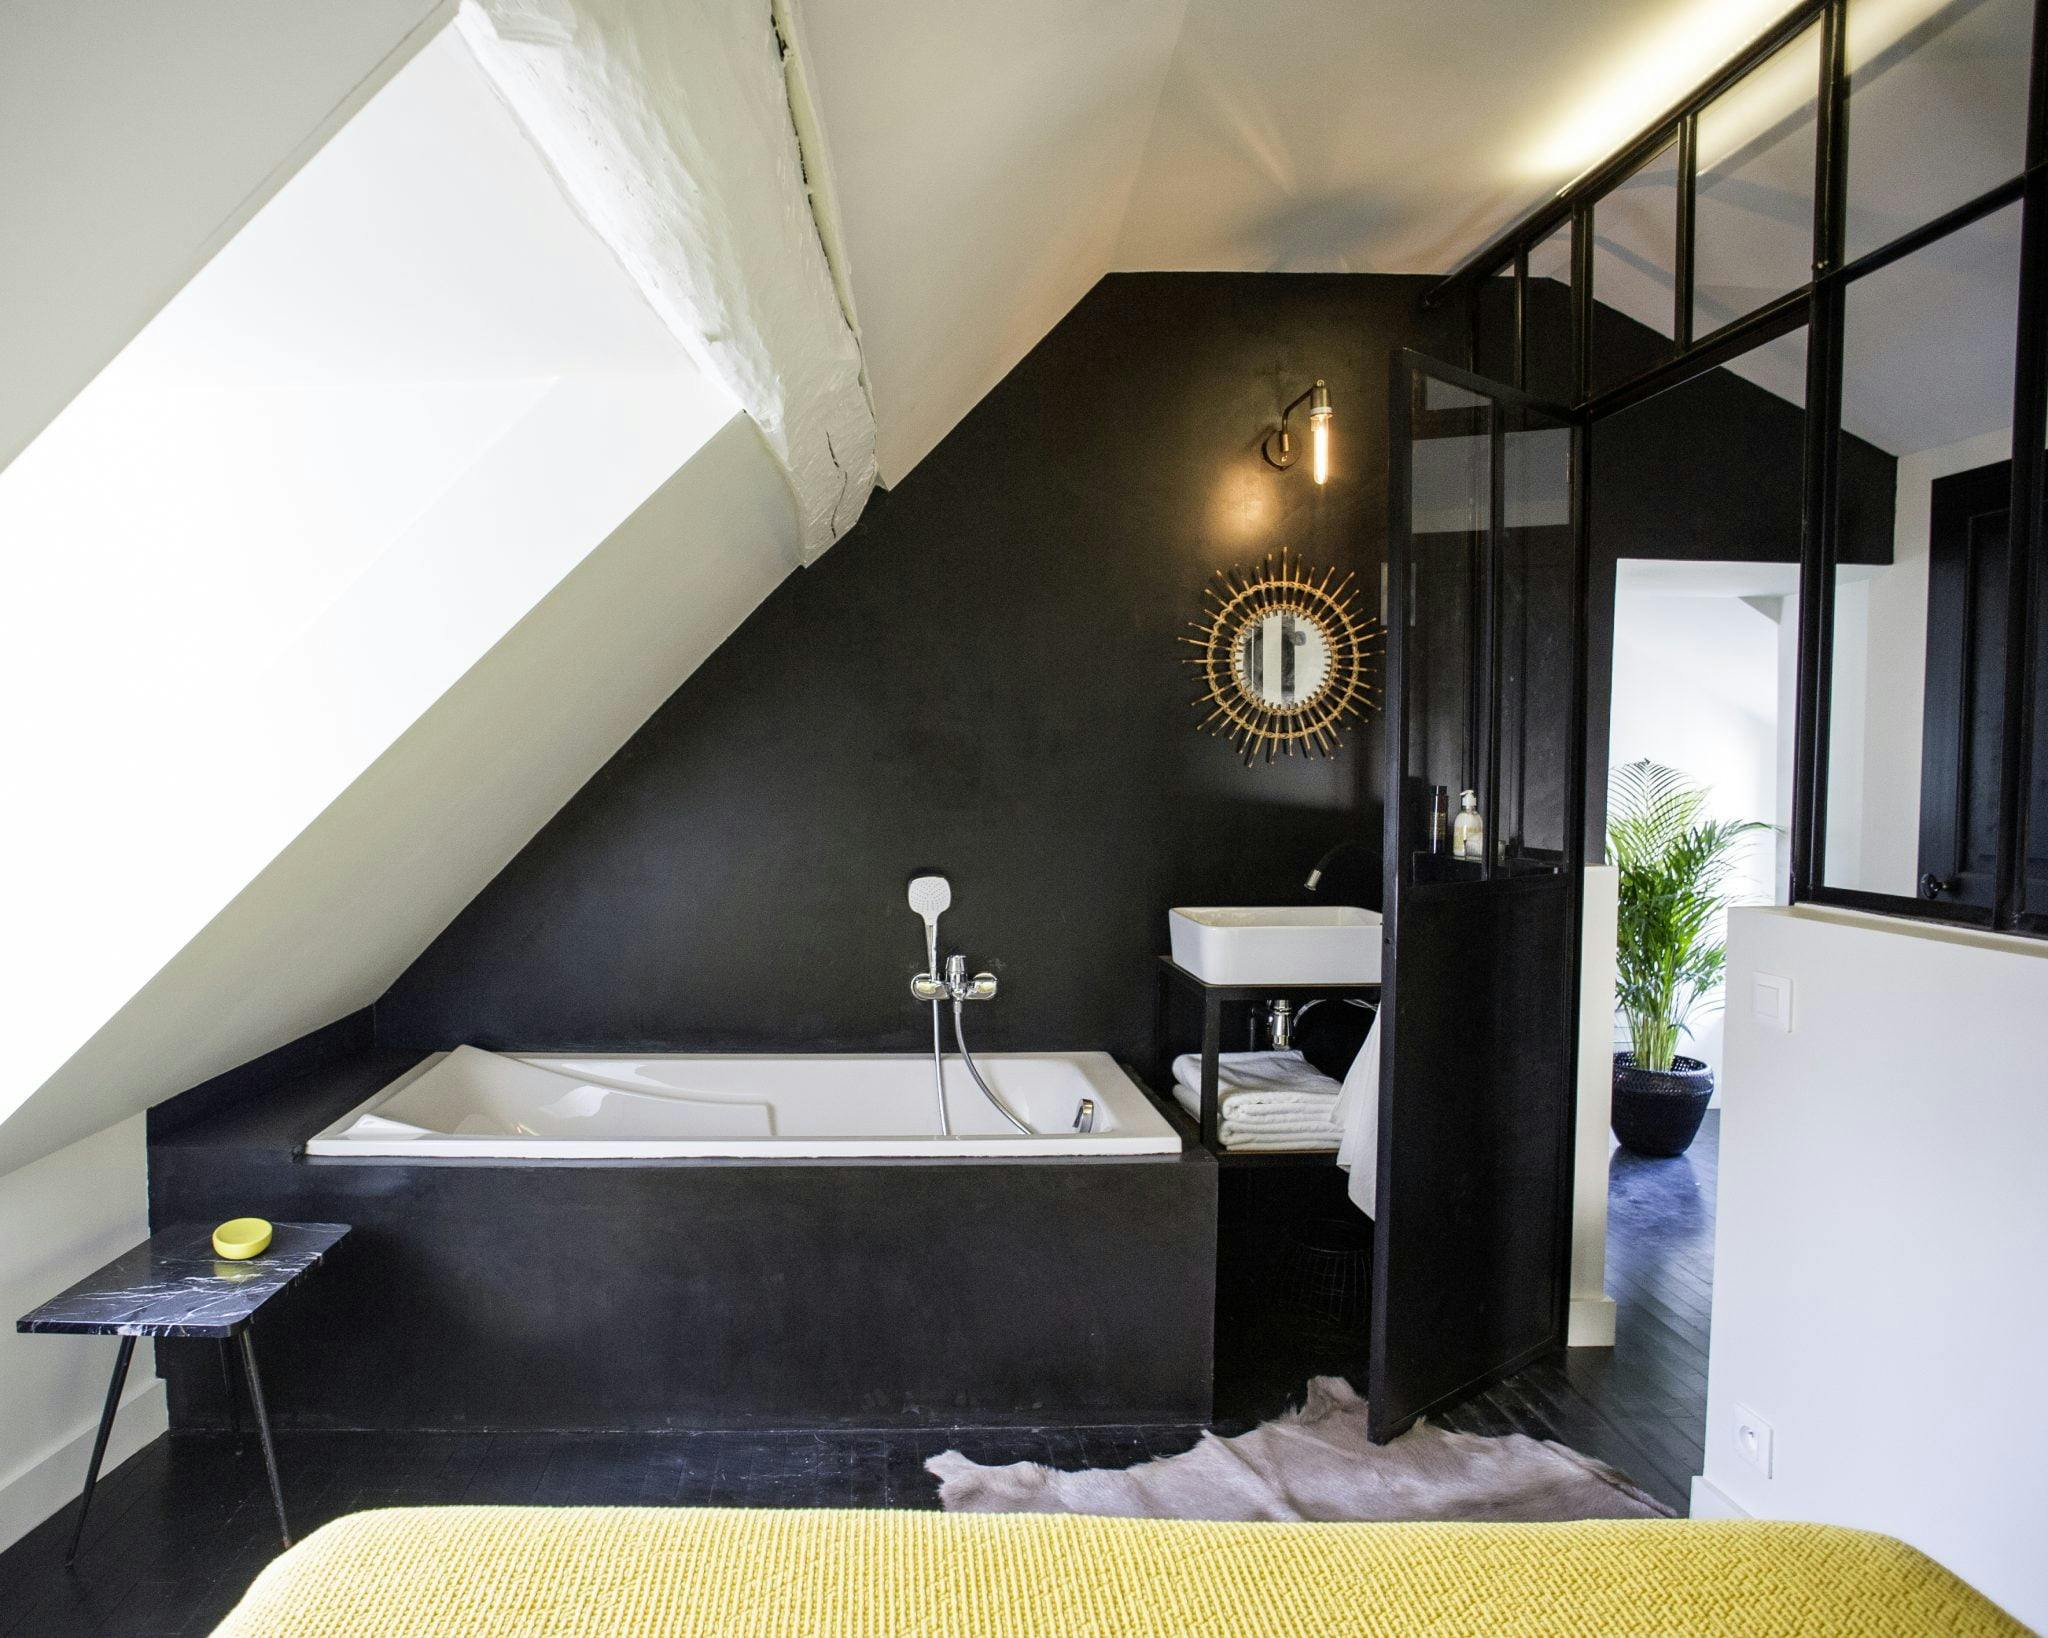 Detail of the bathroom with black walls, glass bay window, bathtub.